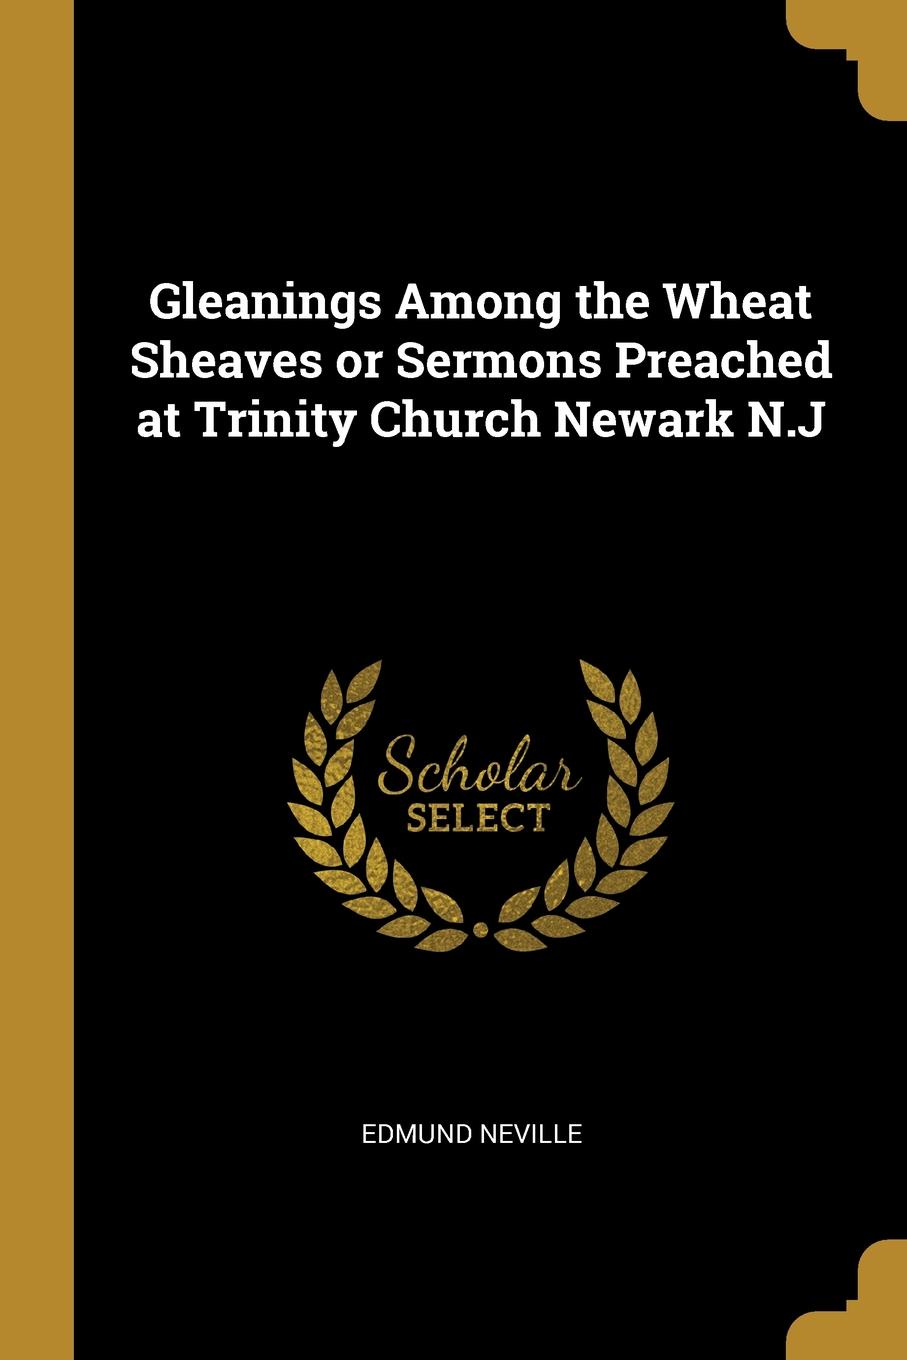 Gleanings Among the Wheat Sheaves or Sermons Preached at Trinity Church Newark N.J